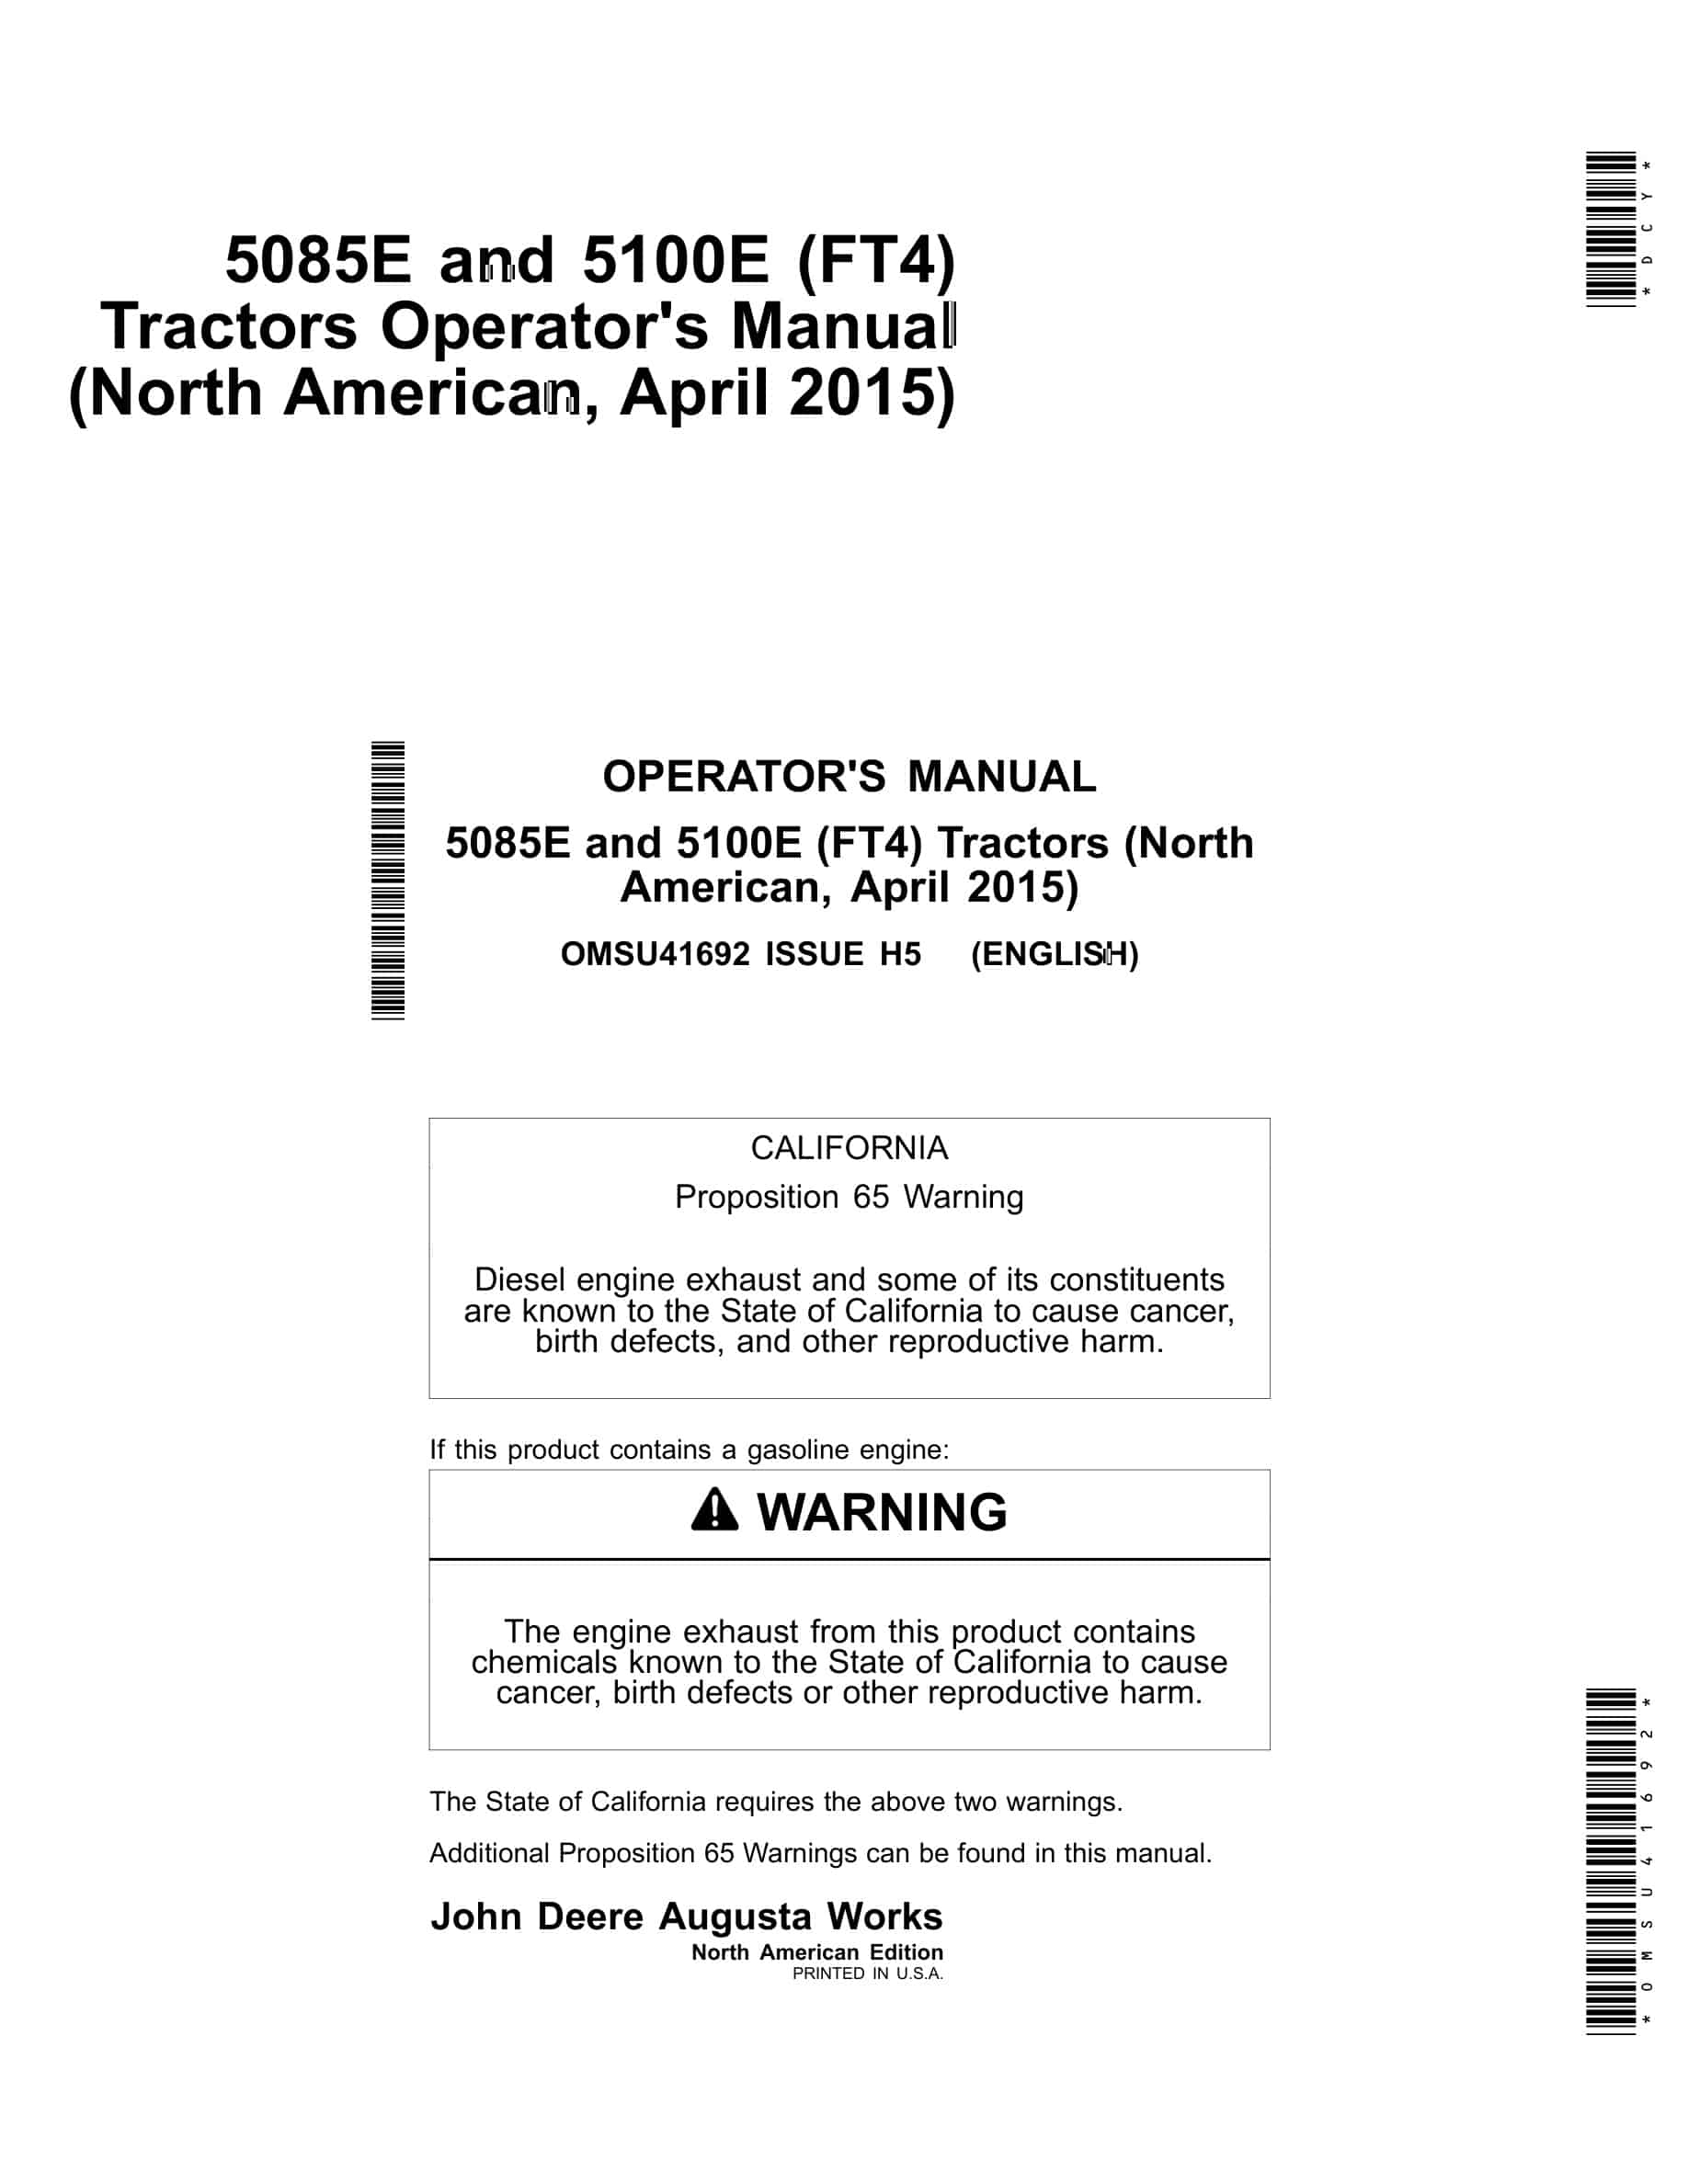 John Deere 5085E and 5100E (FT4) Tractor Operator Manual OMSU41692-1